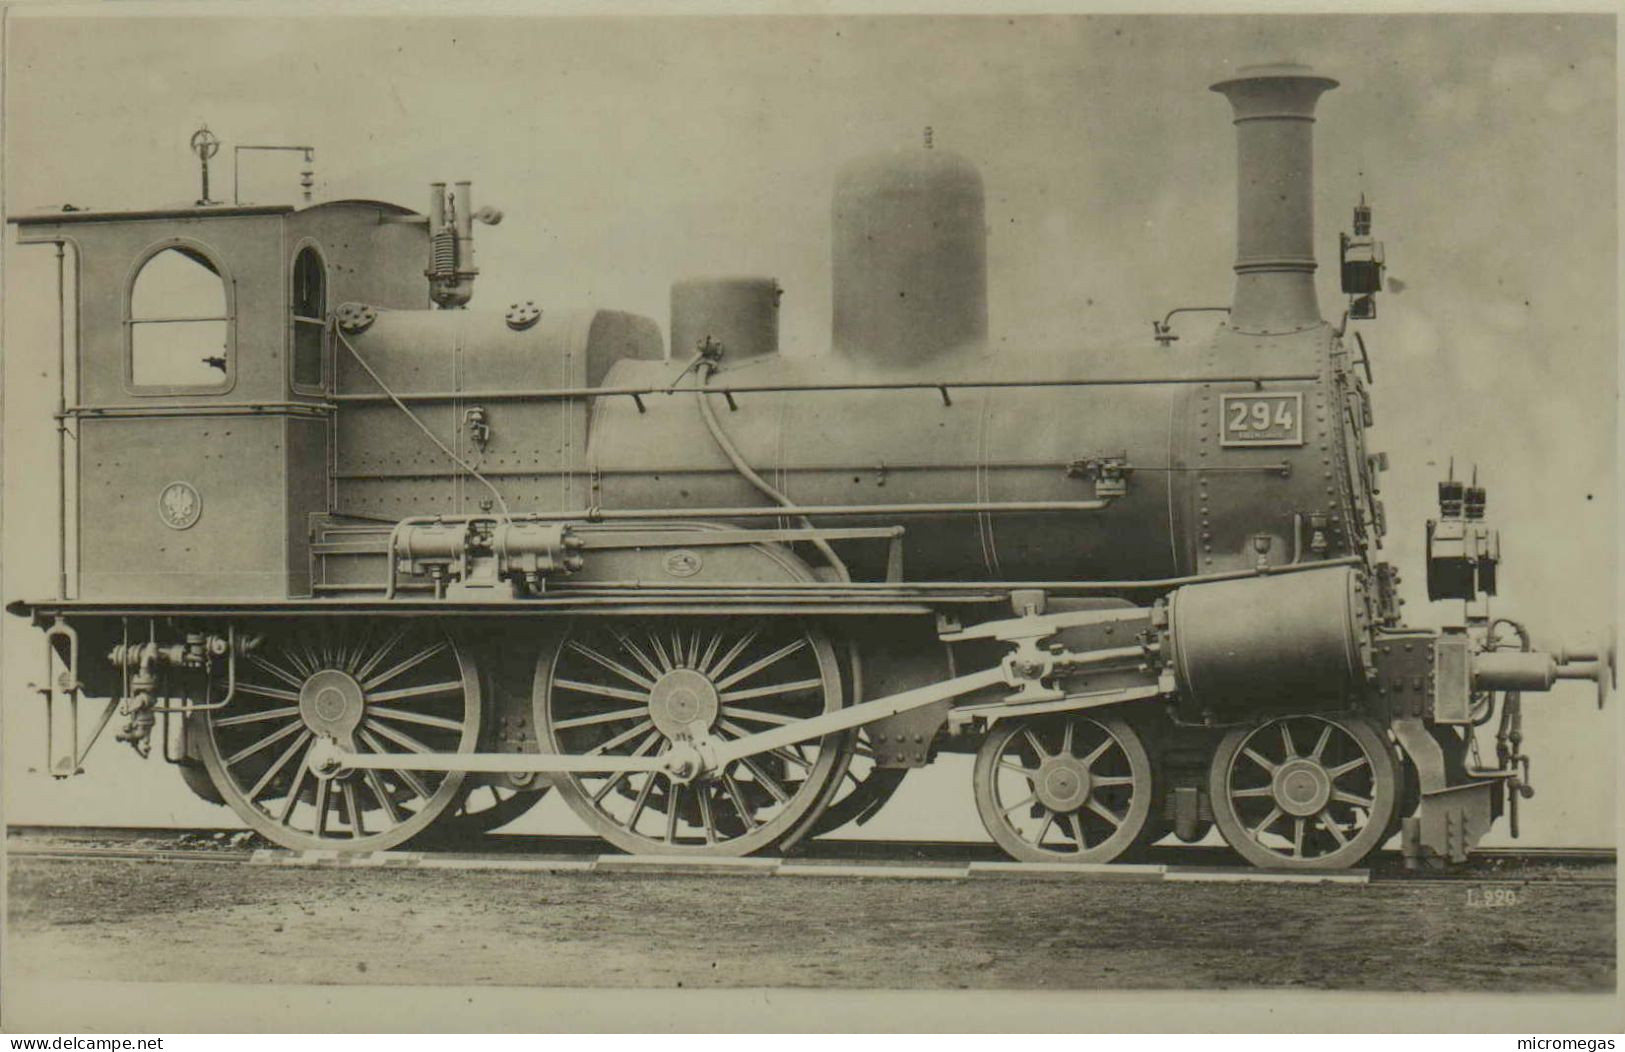 Reproduction - Locomotive Vulkan 1879 - Treni